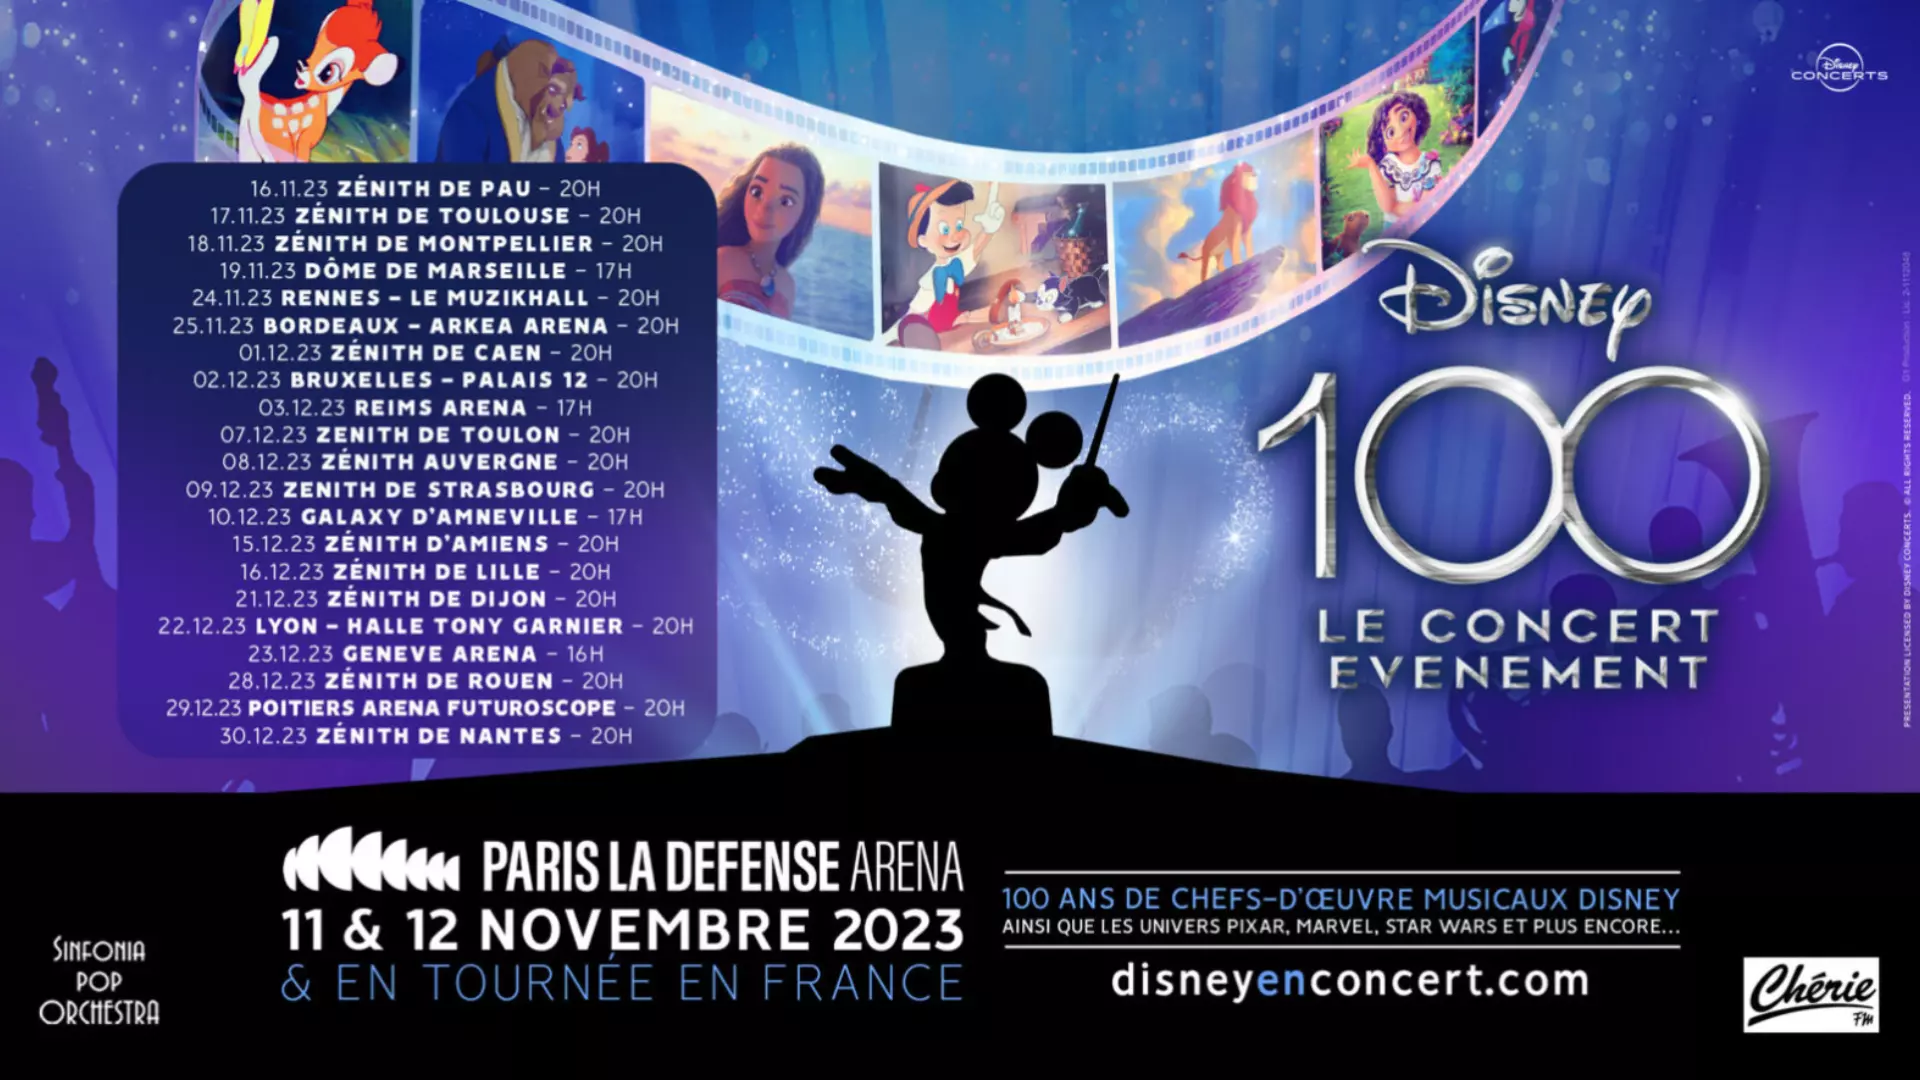 Disney 100 concert évènement - newsroom.disney